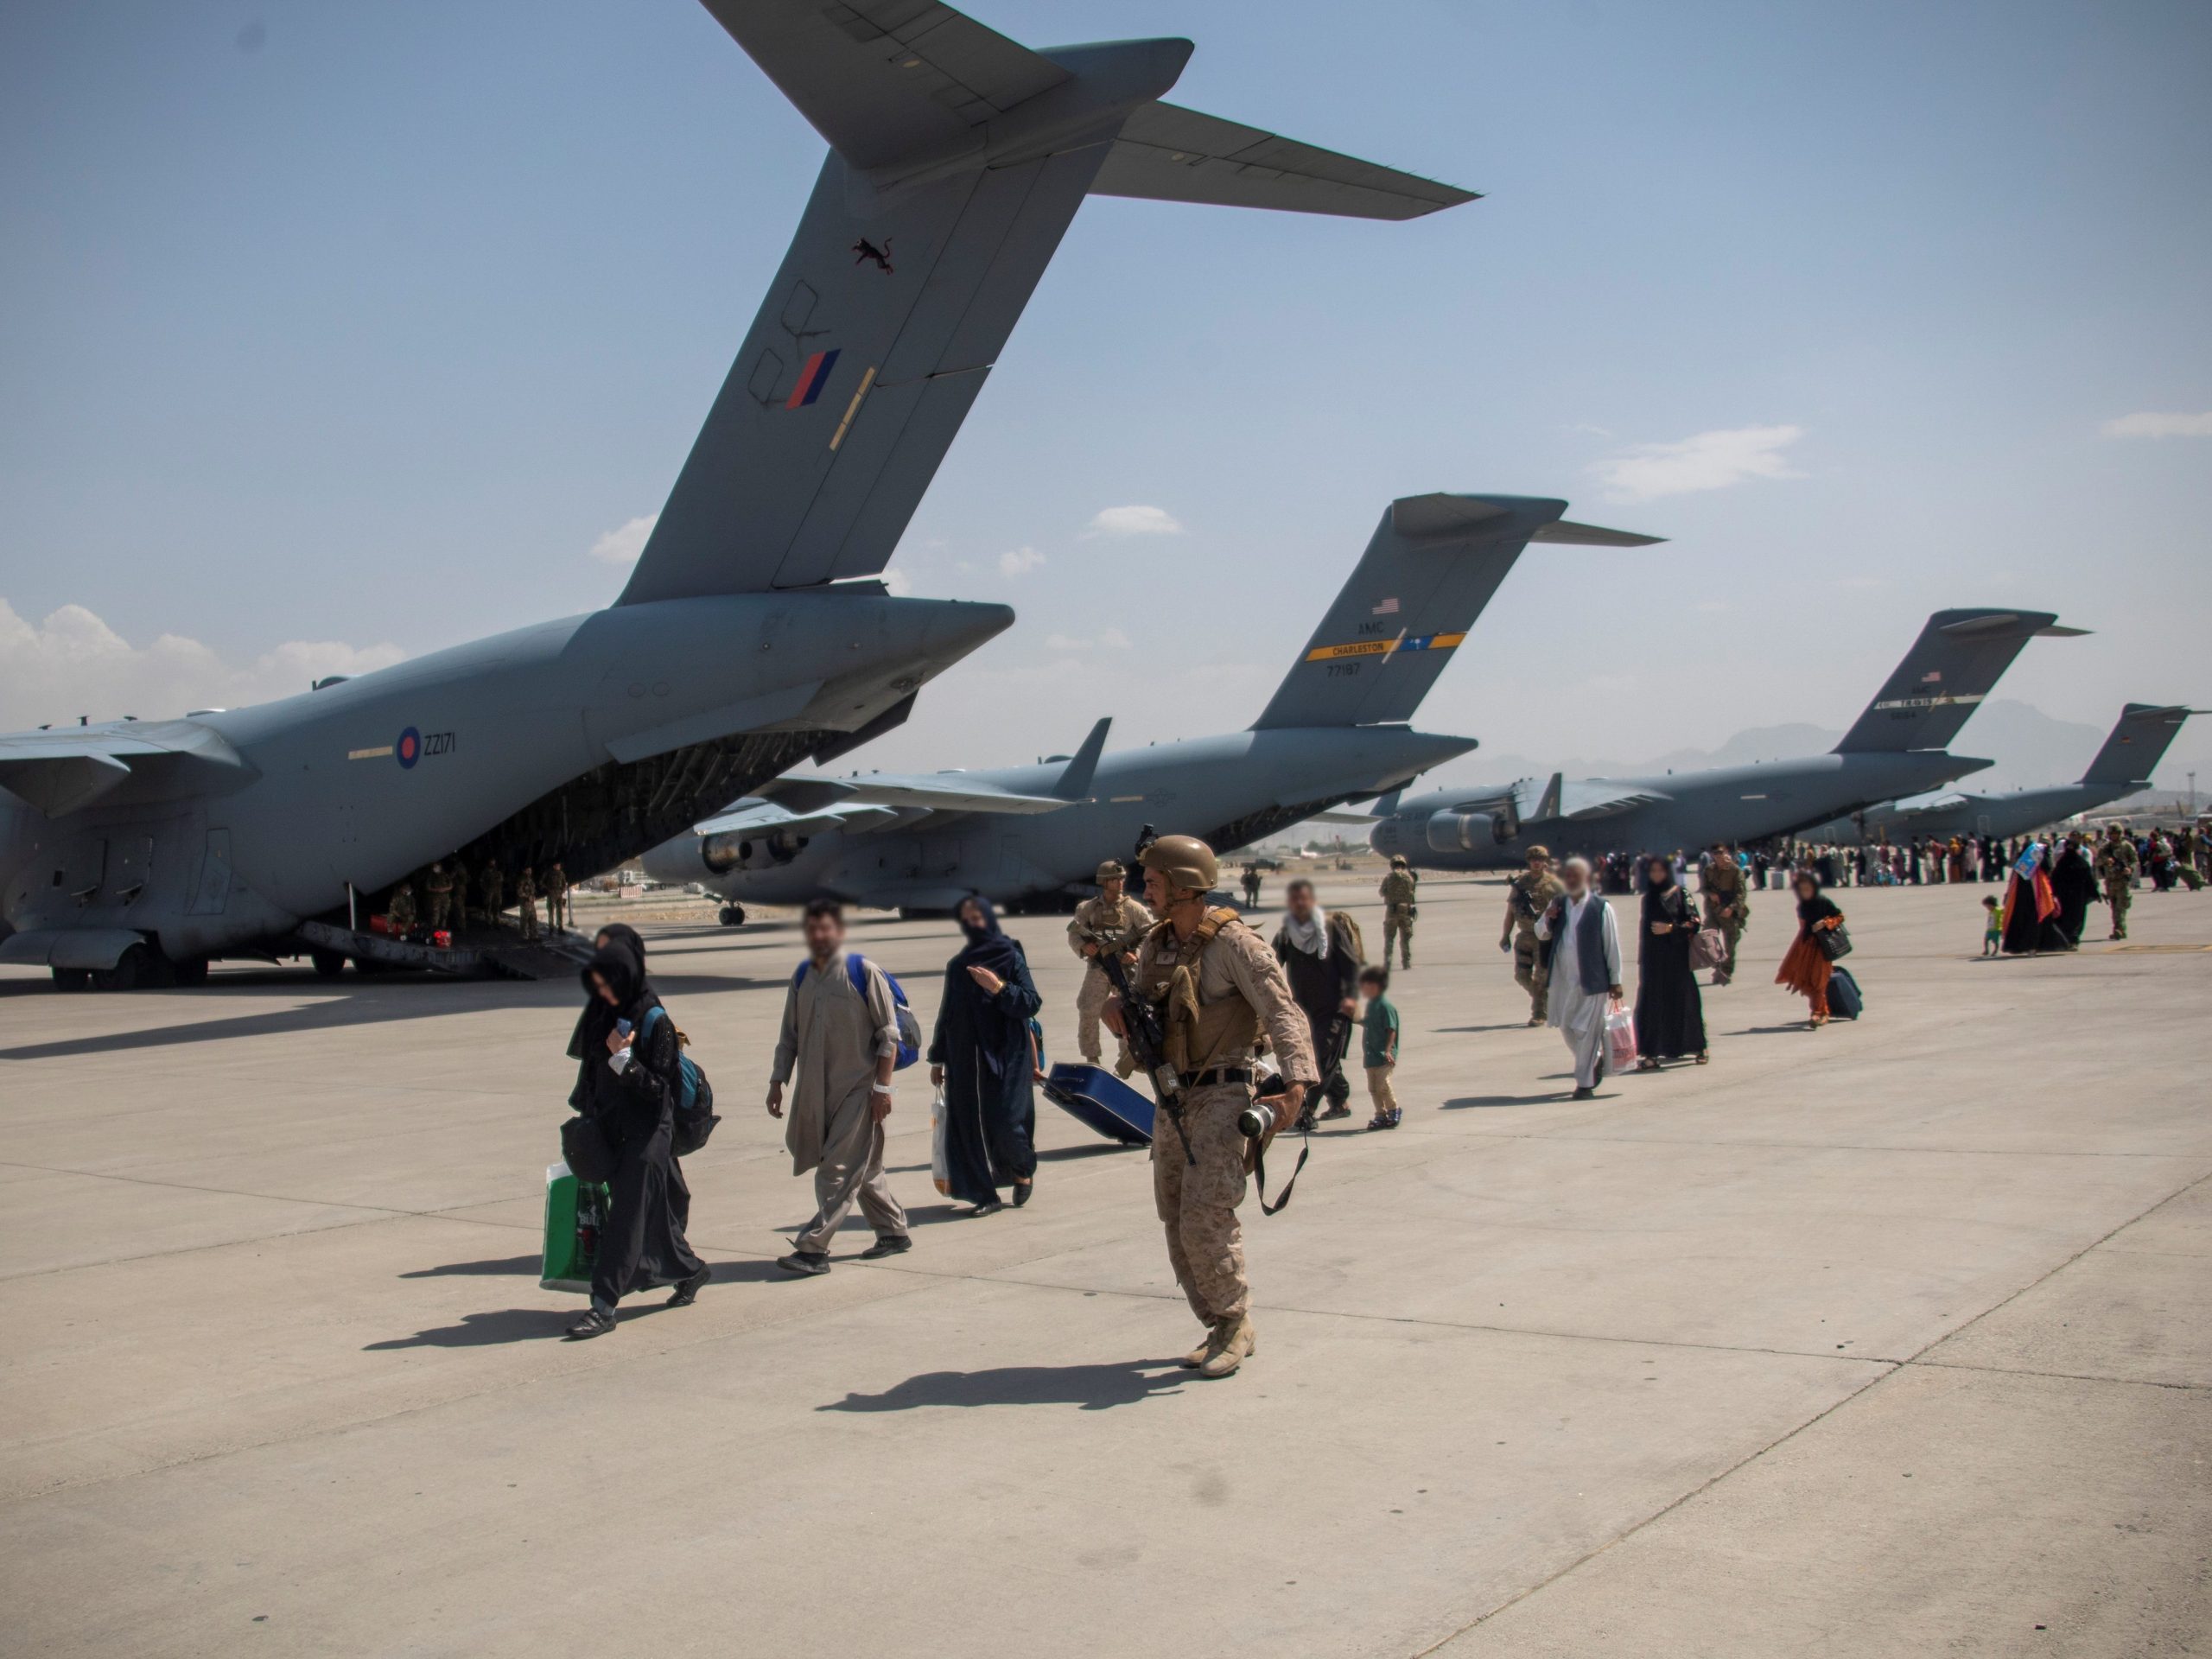 UK Afghanistan evacuation